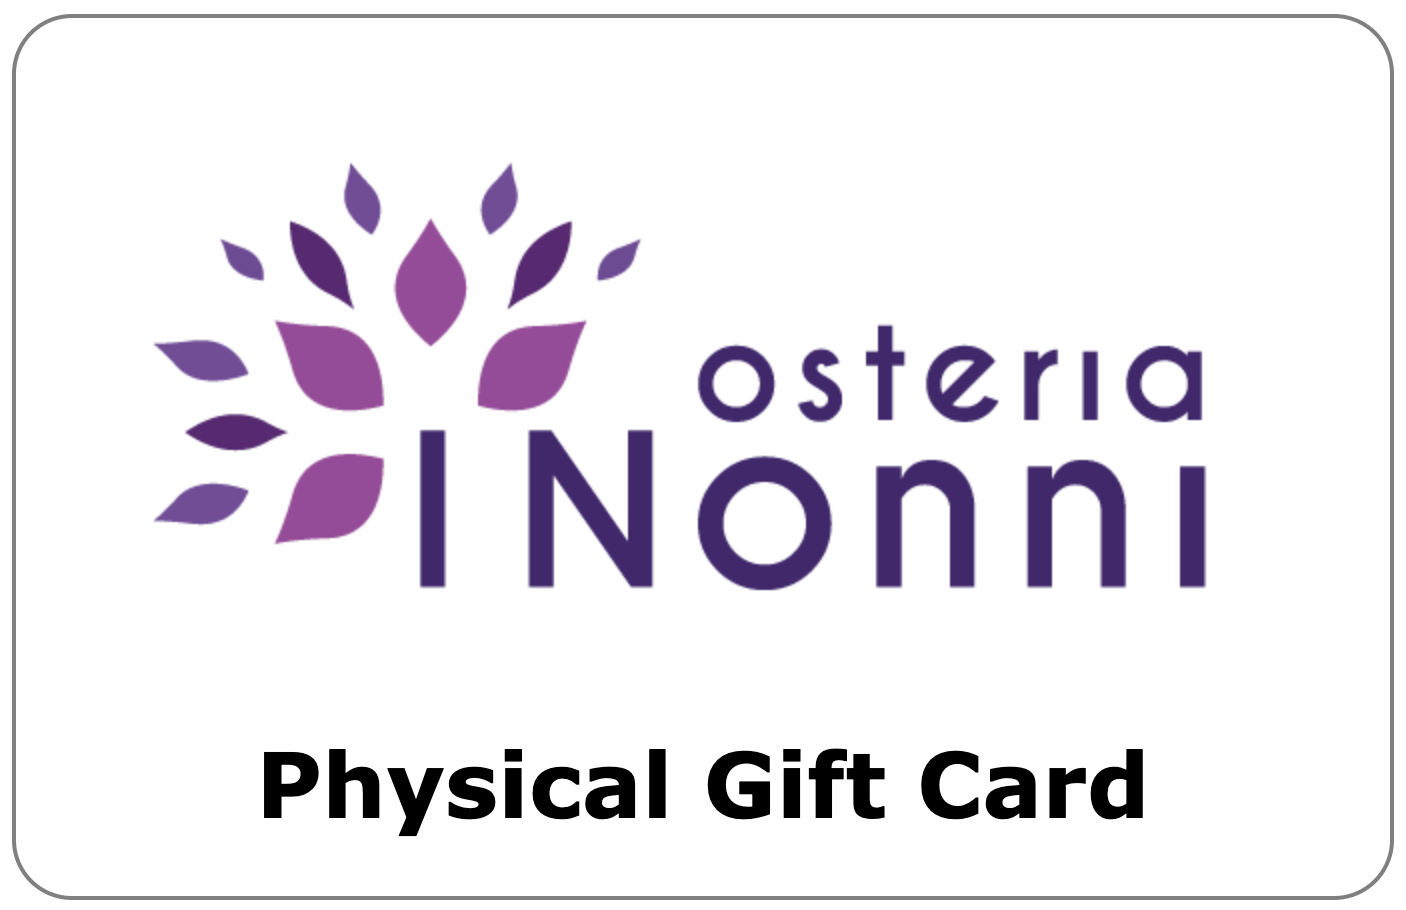 I Nonni Physical Gift Card